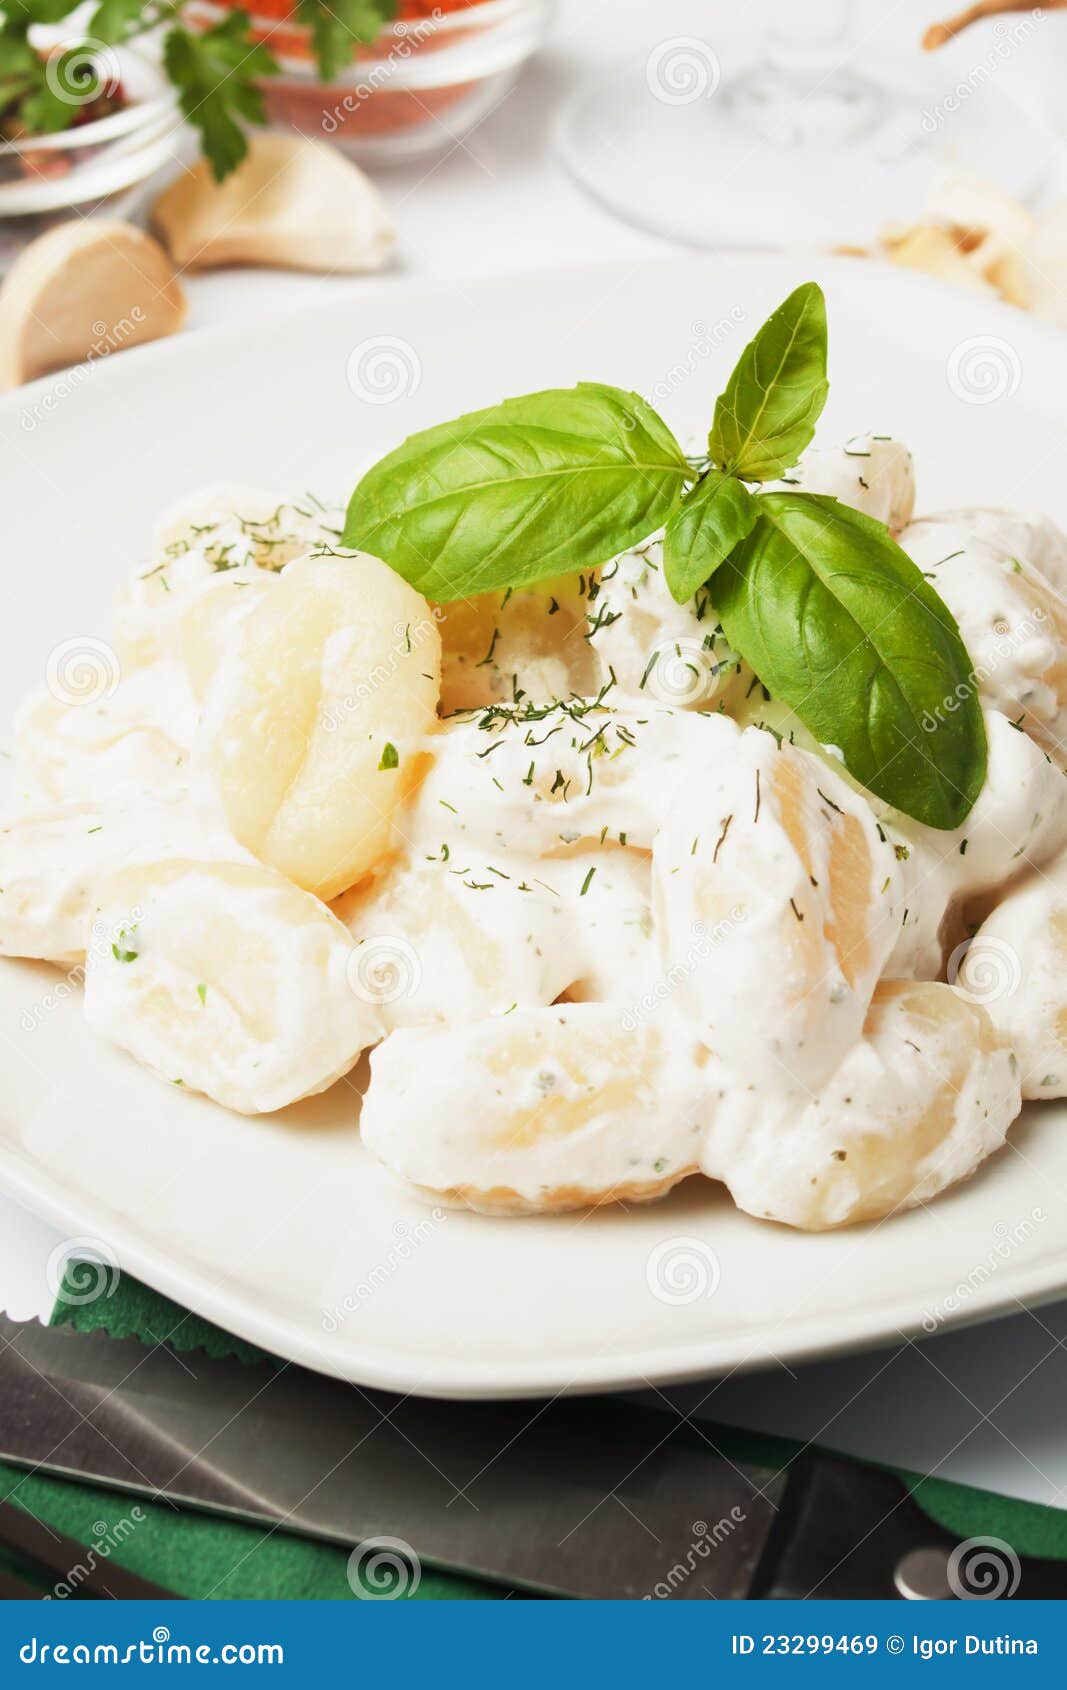 gnocchi di patata with basilico and cheese sauce